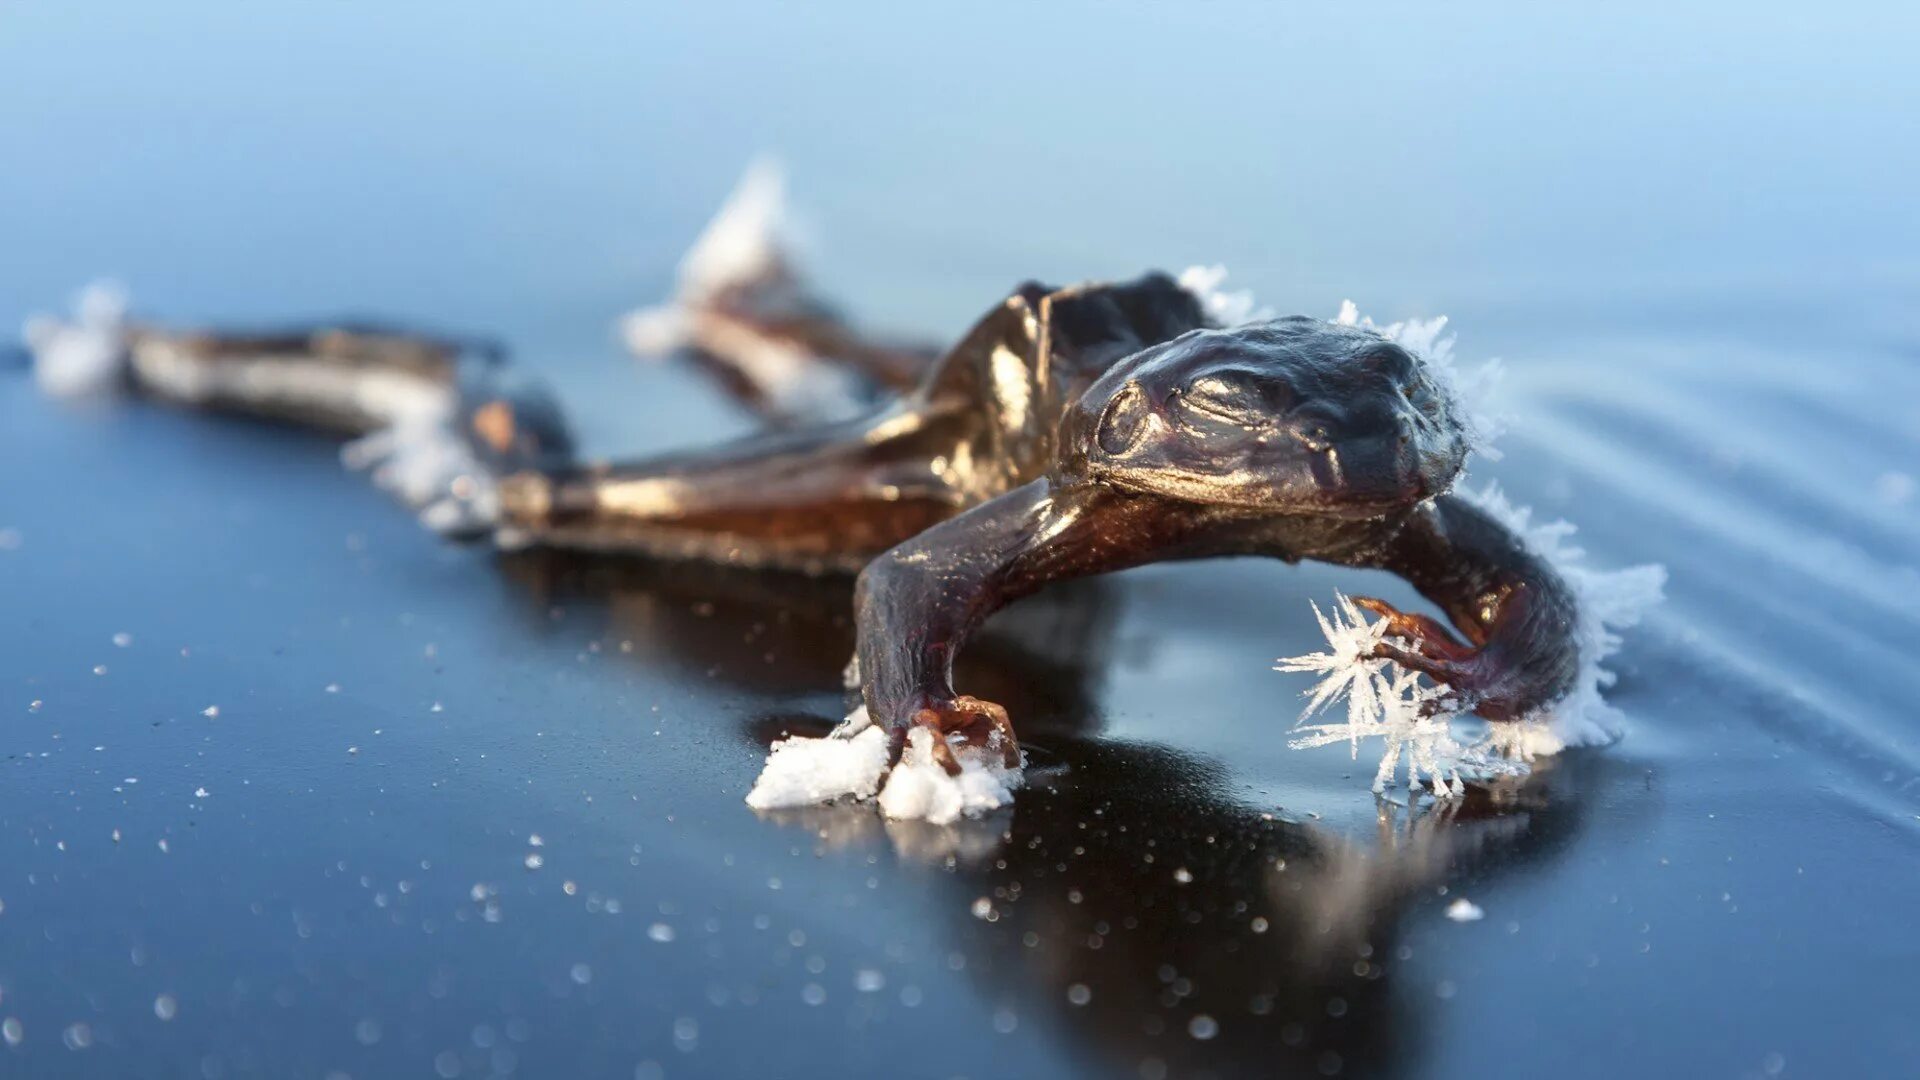 Древесная лягушка на Аляске. Rana sylvatica древесная лягушка. Лягушка во льду. Замерзшая лягушка. Анабиоз лягушки